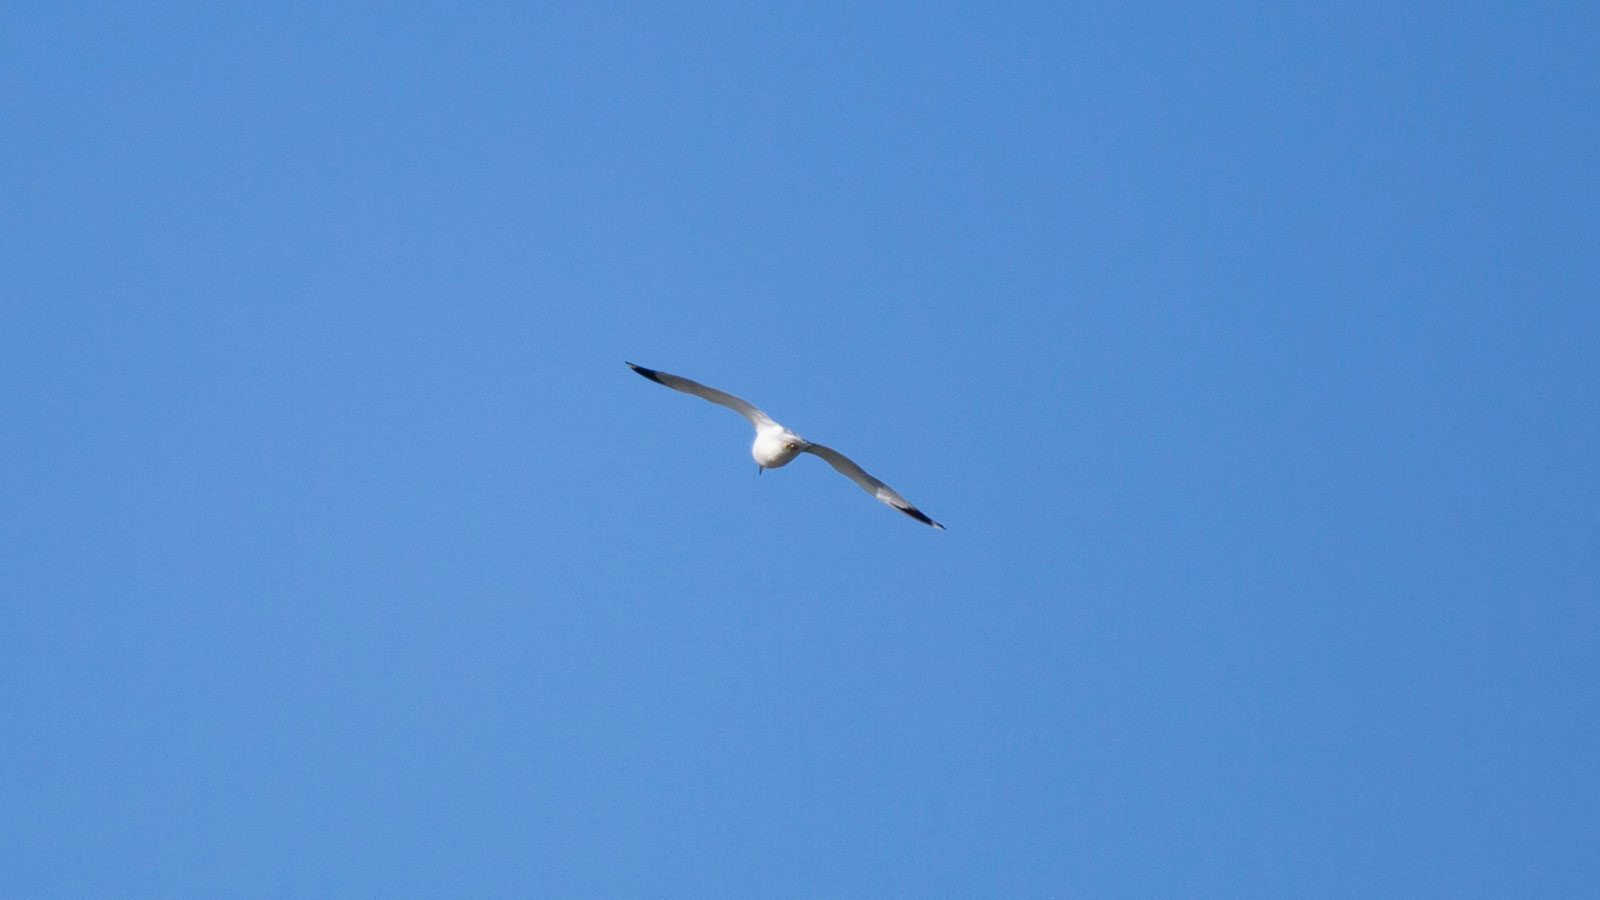 Ring-billed gull flying away through a blue sky